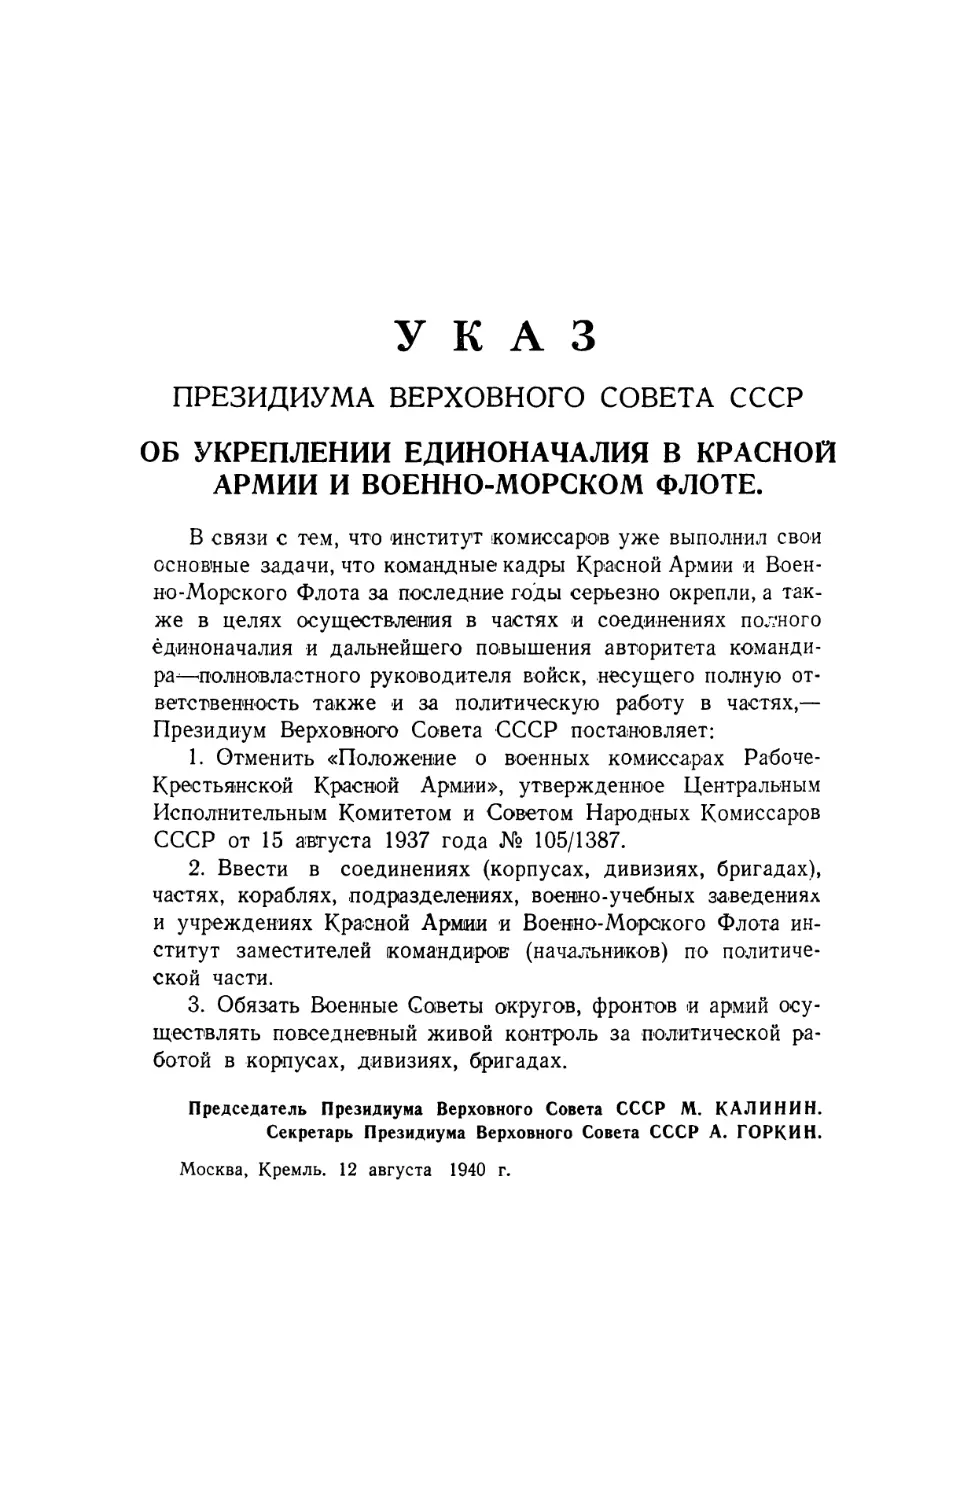 Доклад товарища В. М. МОЛОТОВА - Внешняя политика Советского Союза